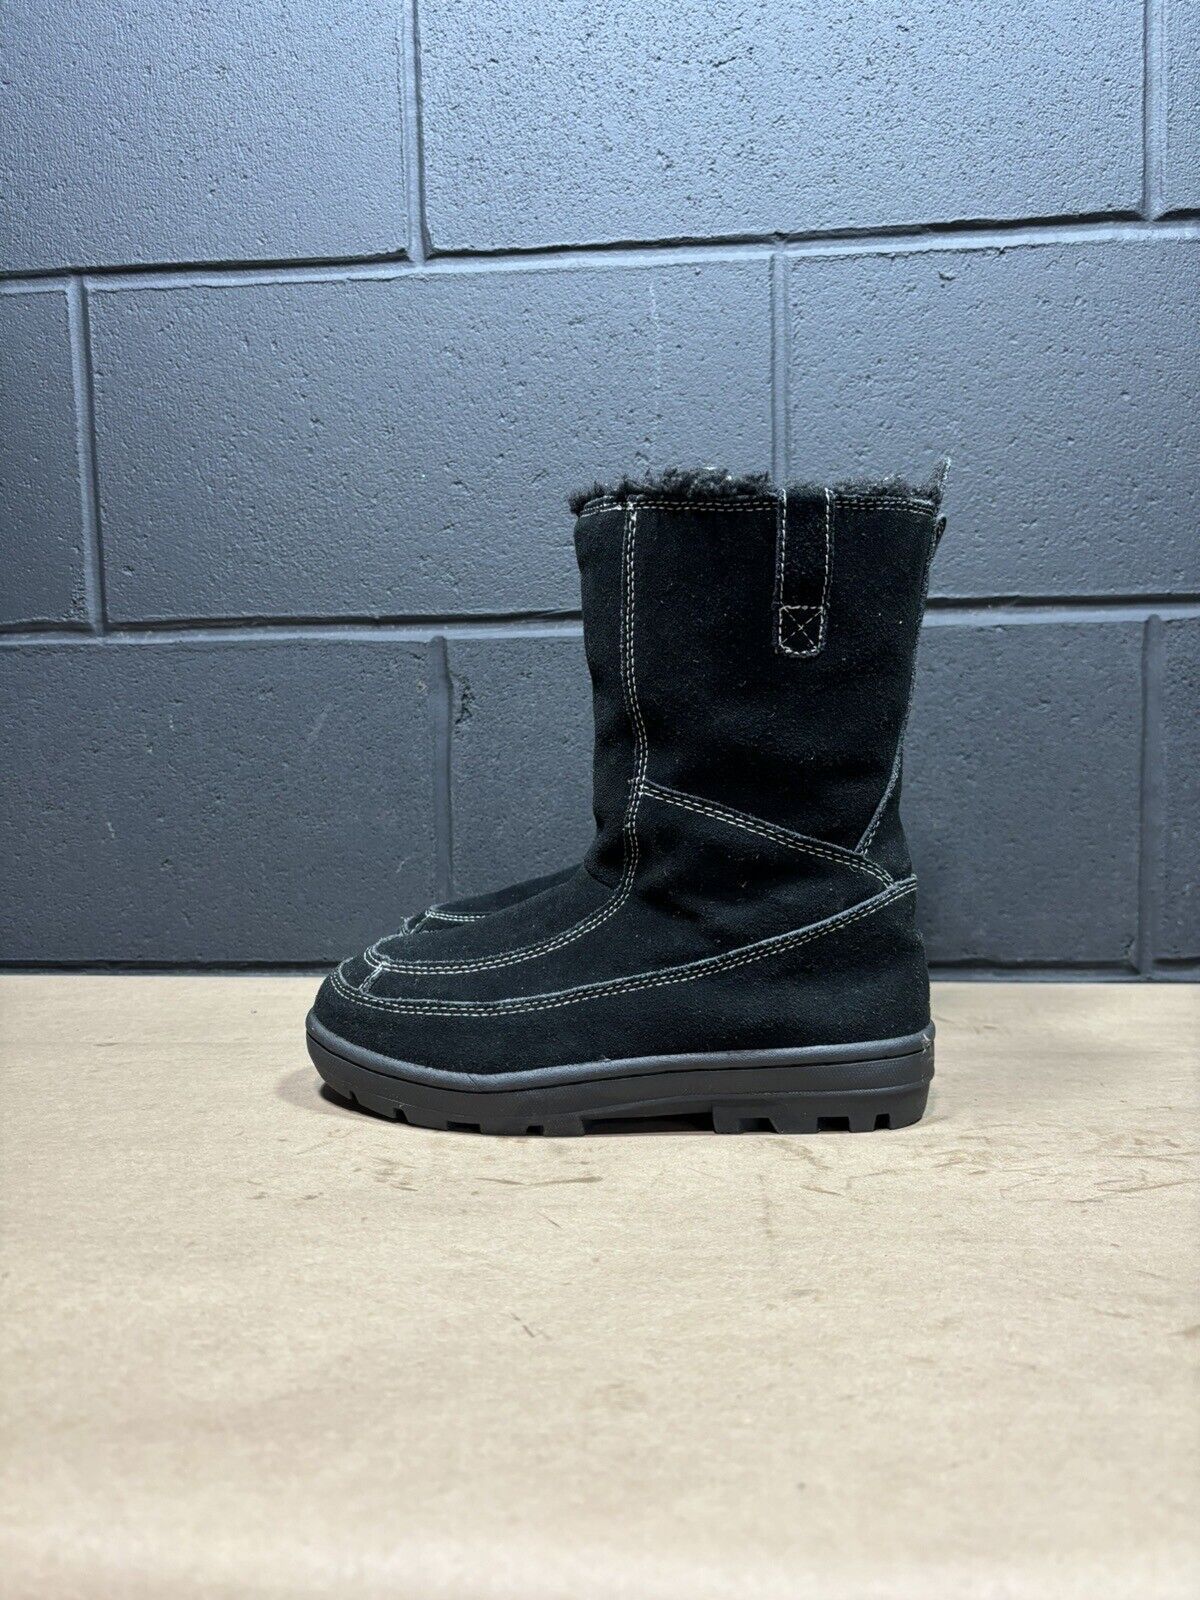 Primary image for Sonoma Sedona Black Leather Winter Boots Women’s Sz 7.5 M